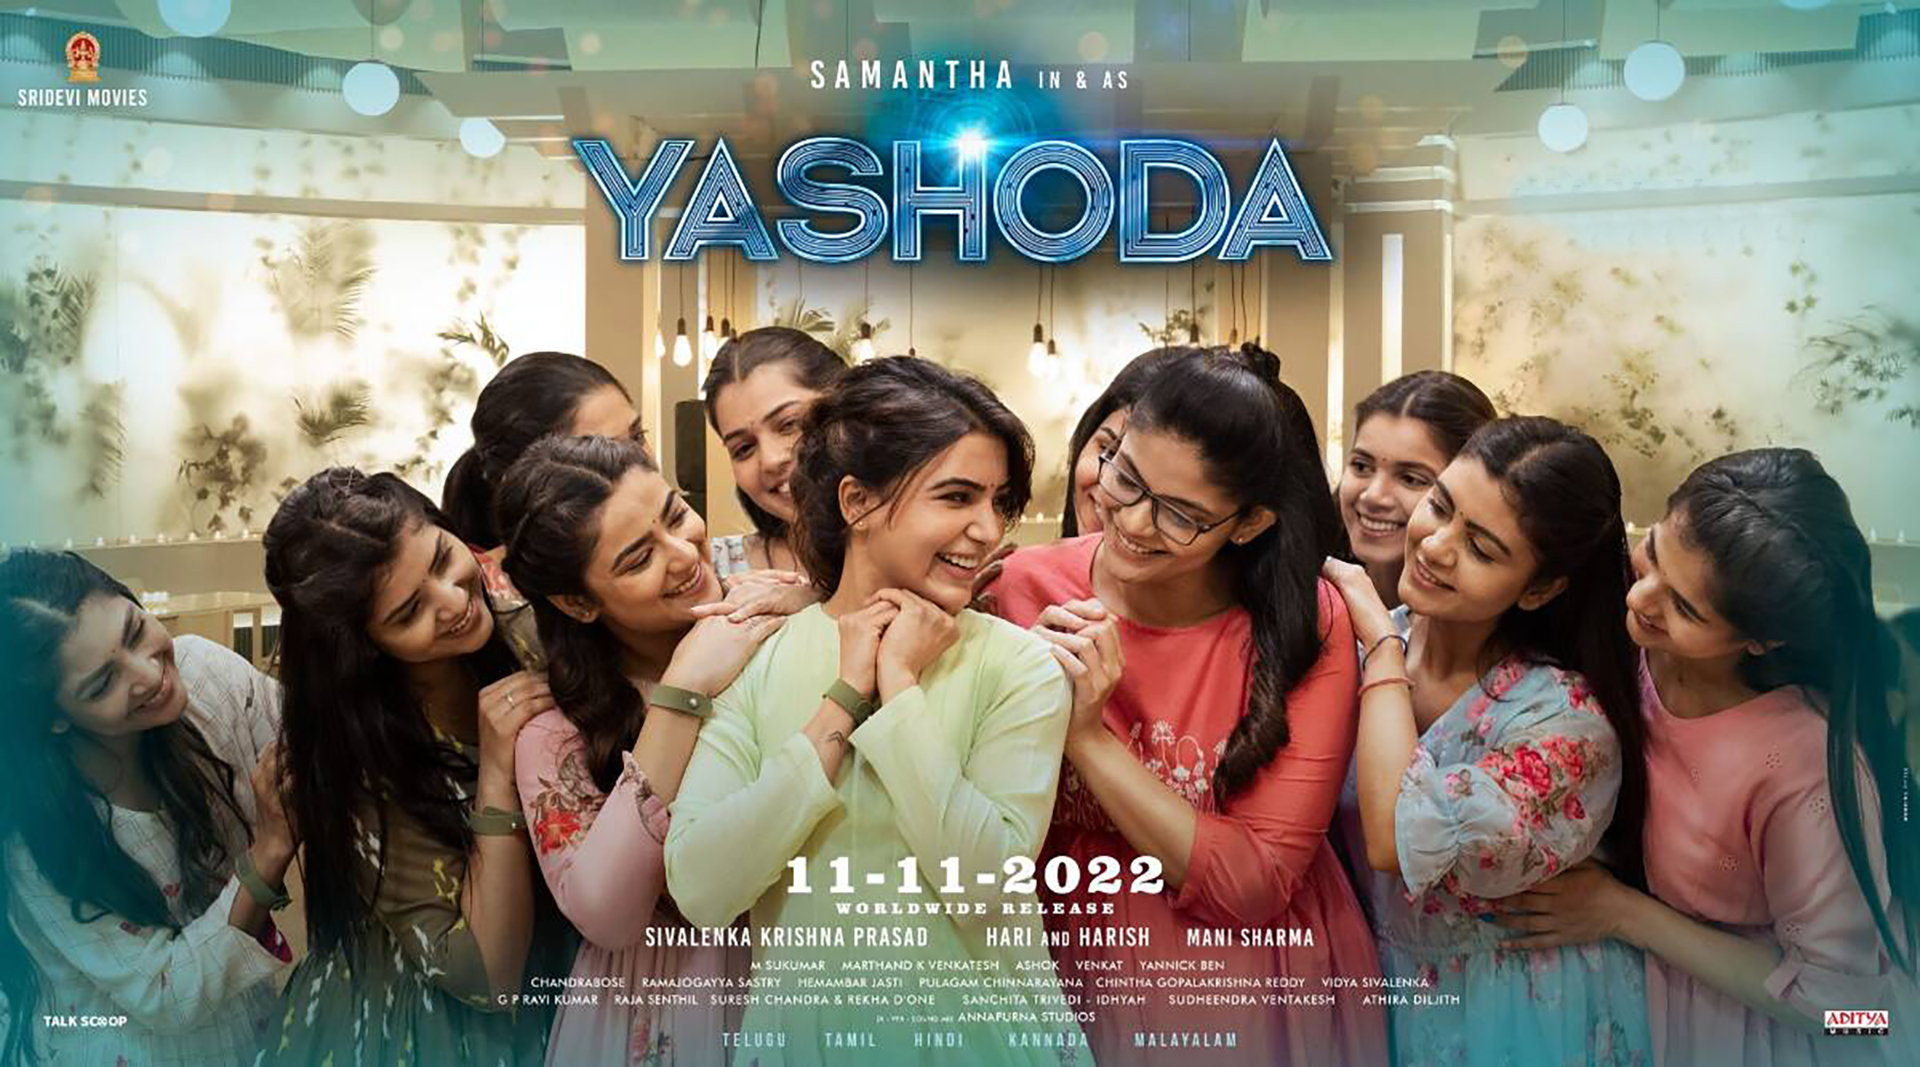 Varalaxmi in the latest release Yashoda alongside Samantha Prabhu